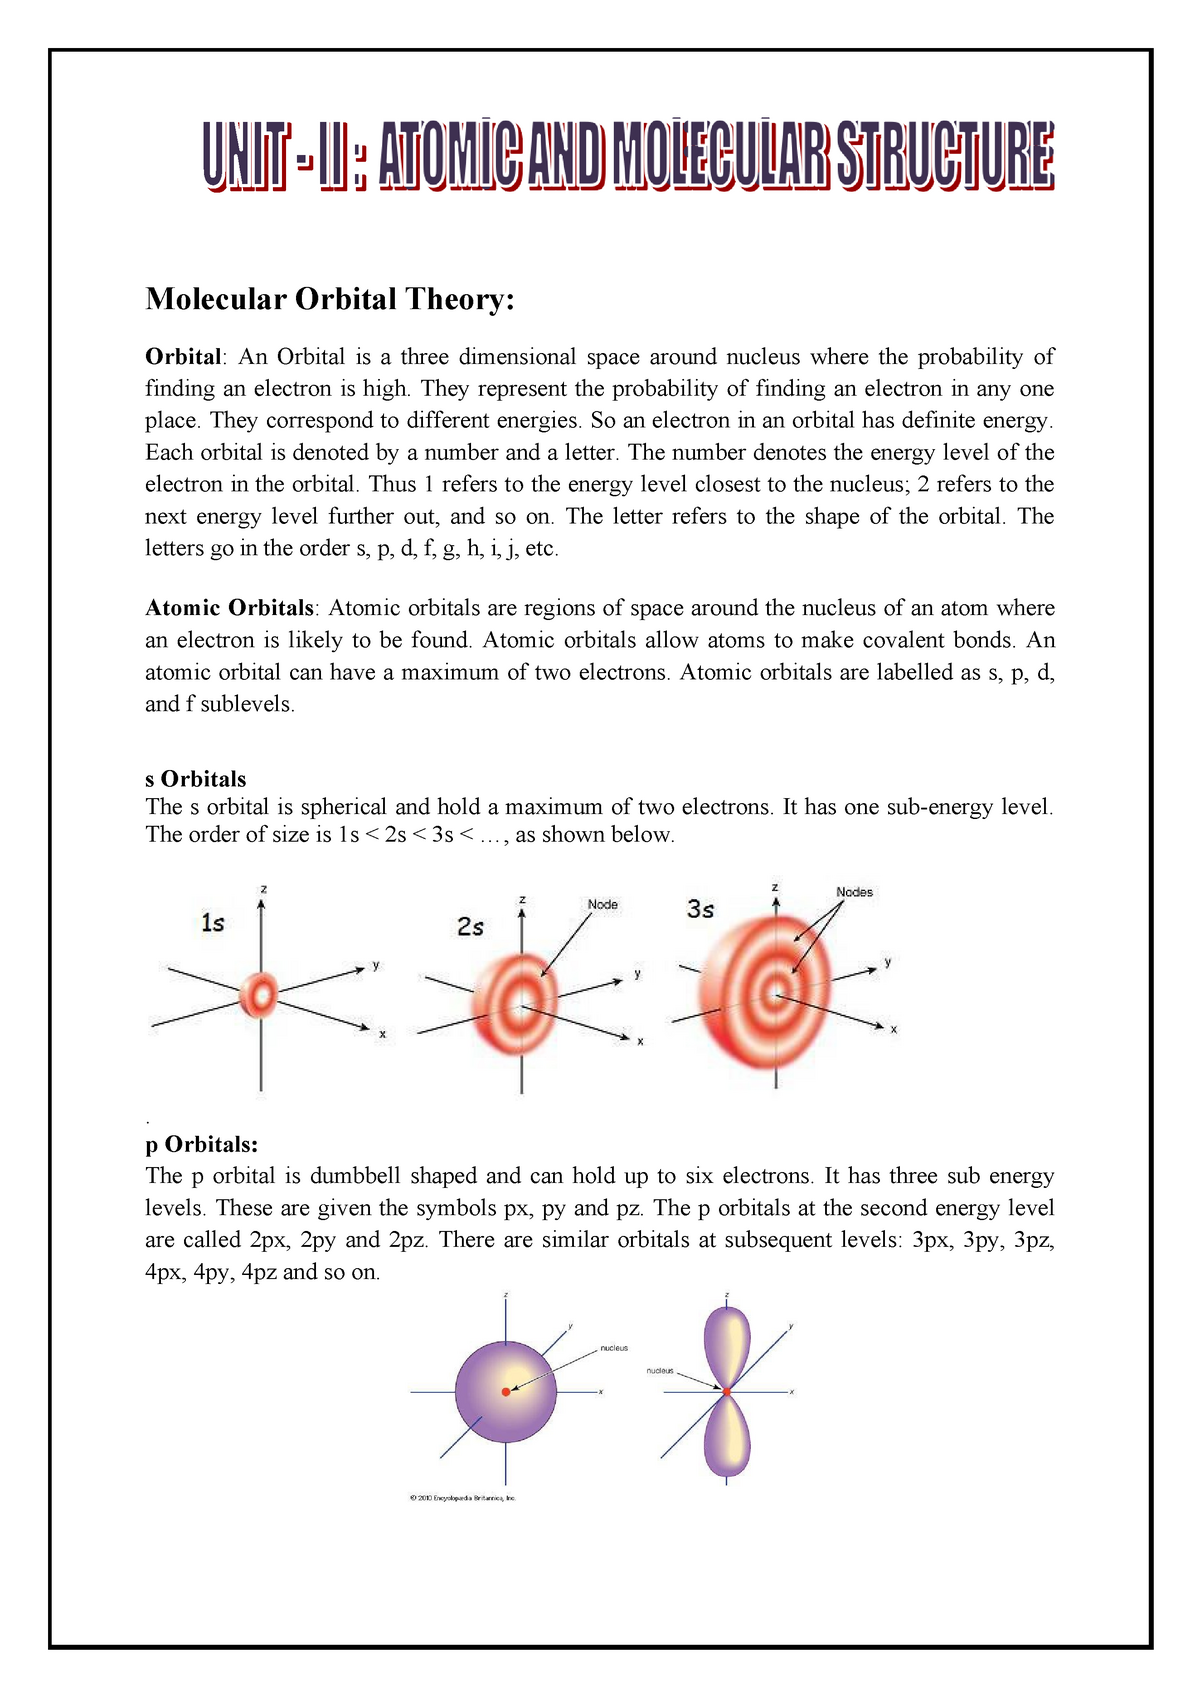 assignment on molecular orbital theory